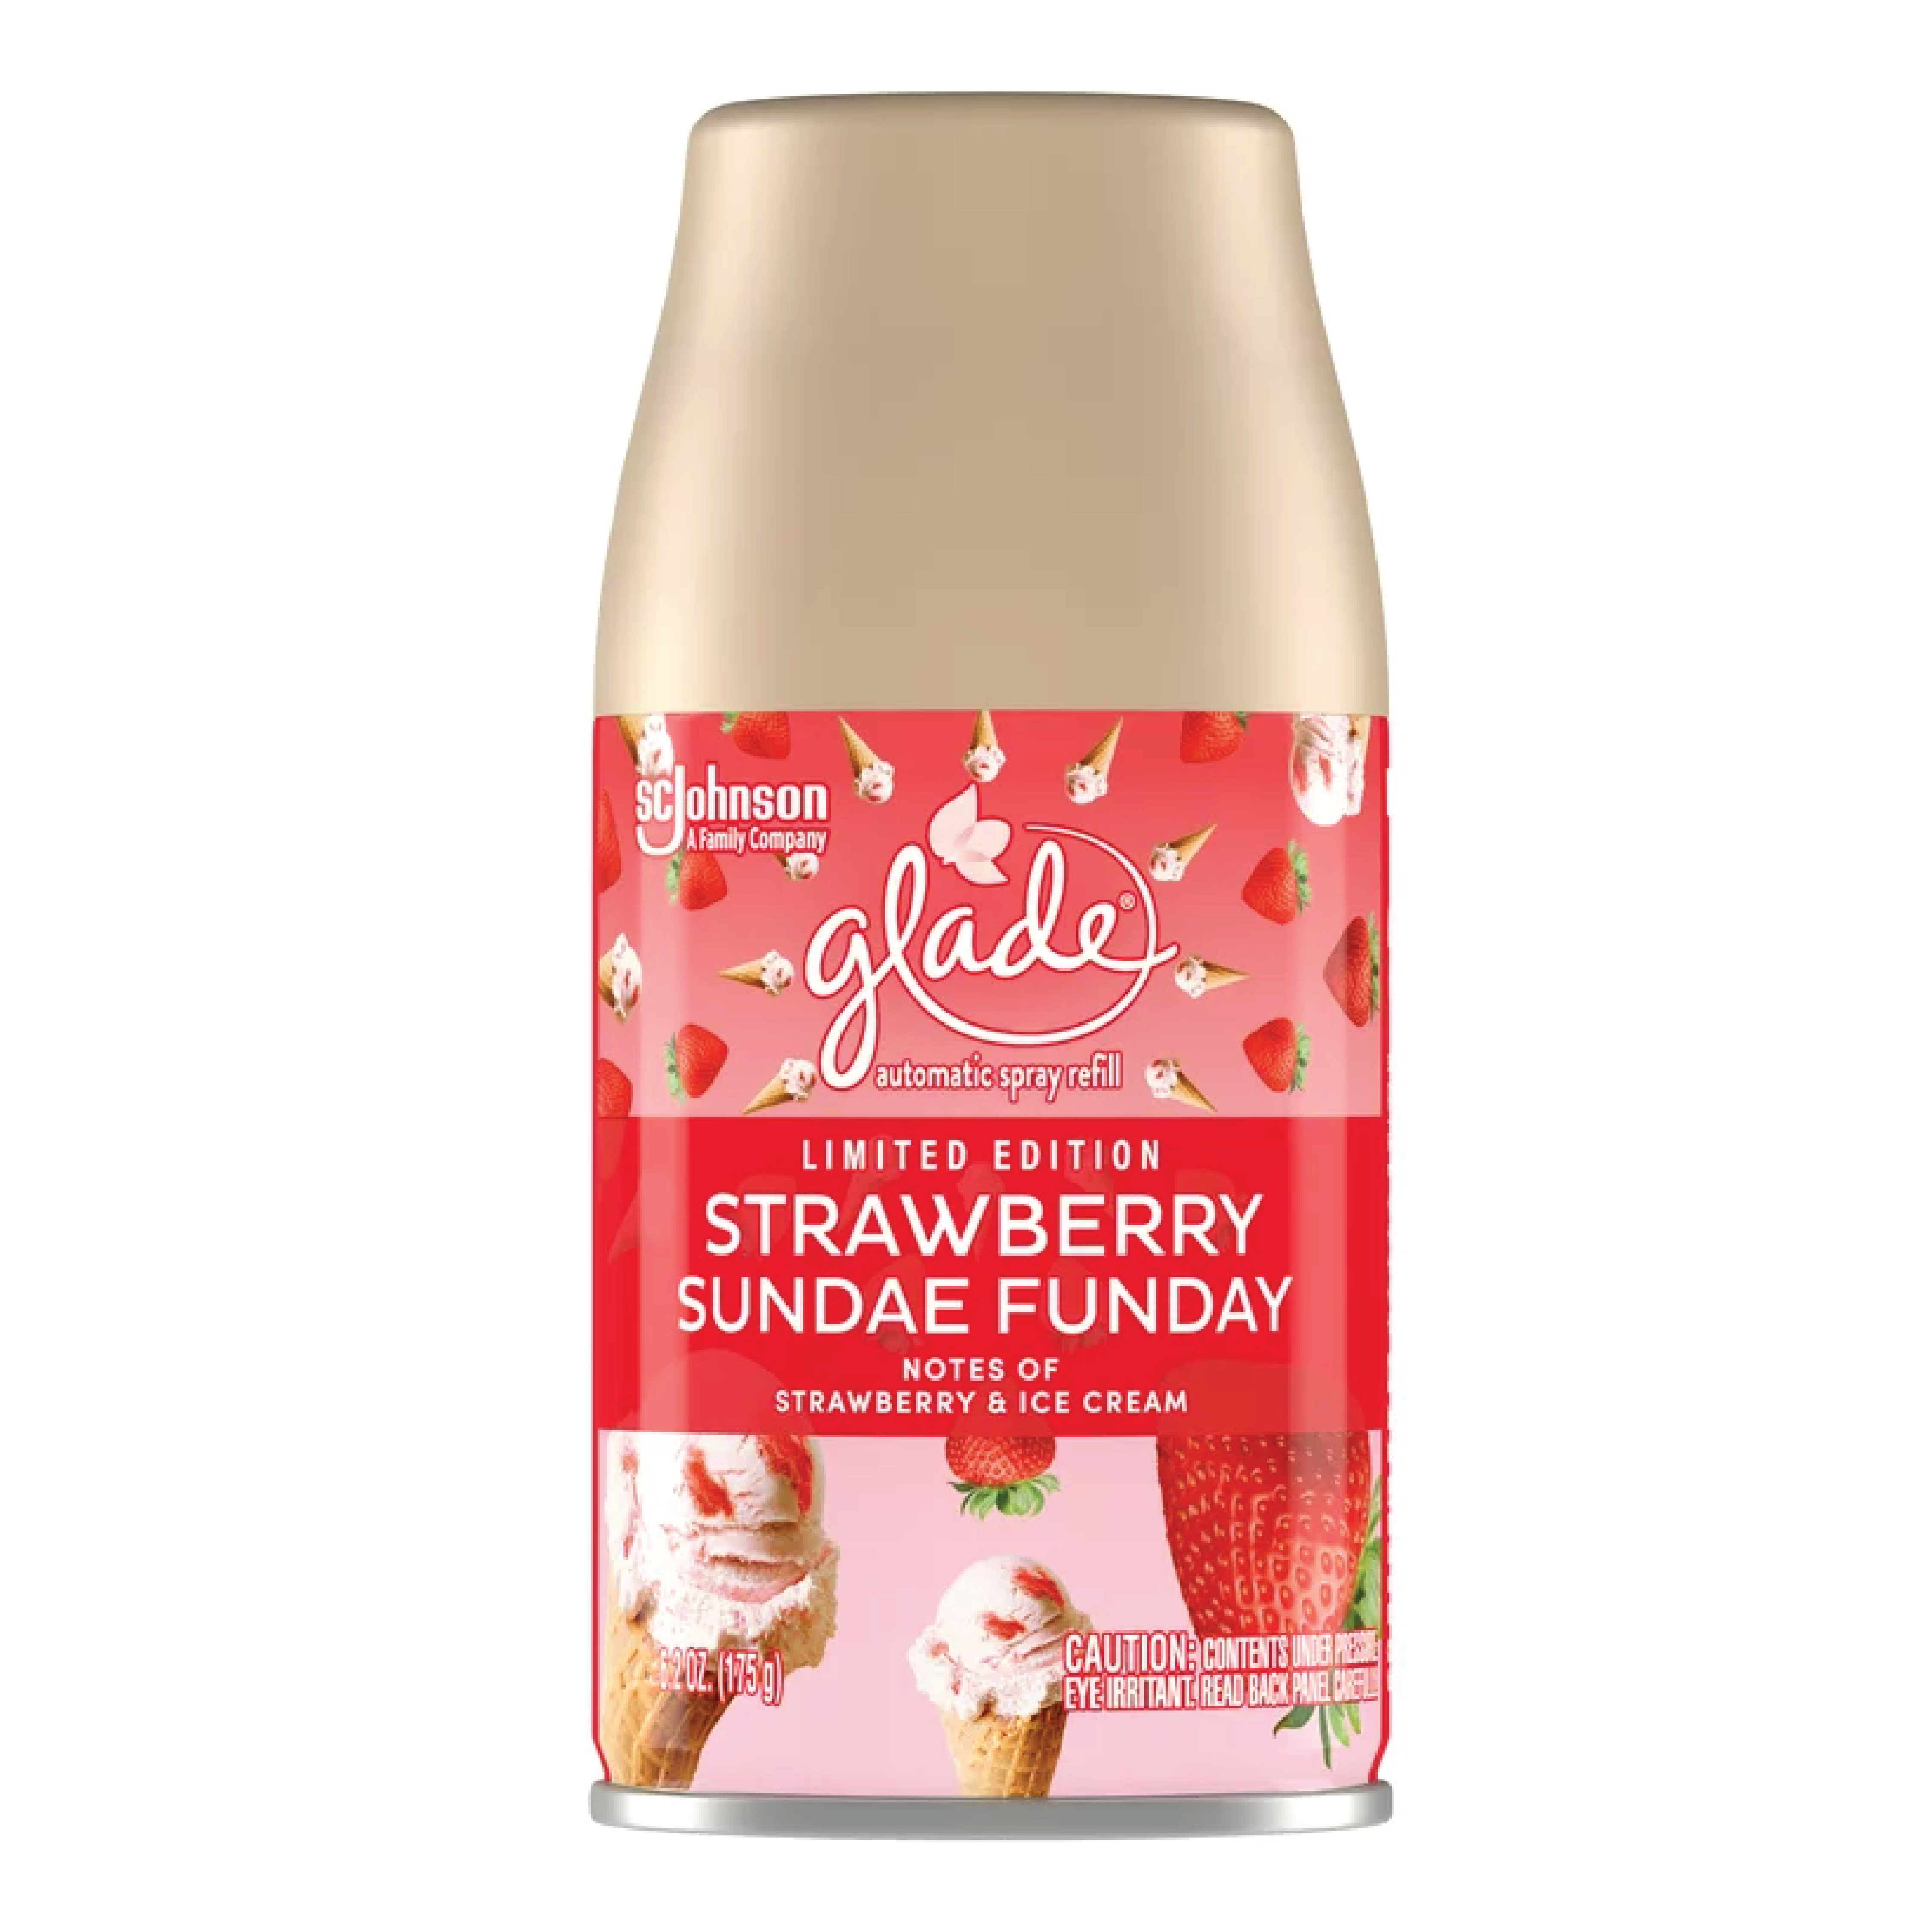 Glade Limited Edition Strawberry Sundae Funday Air Freshener Spray Refill 6.2oz